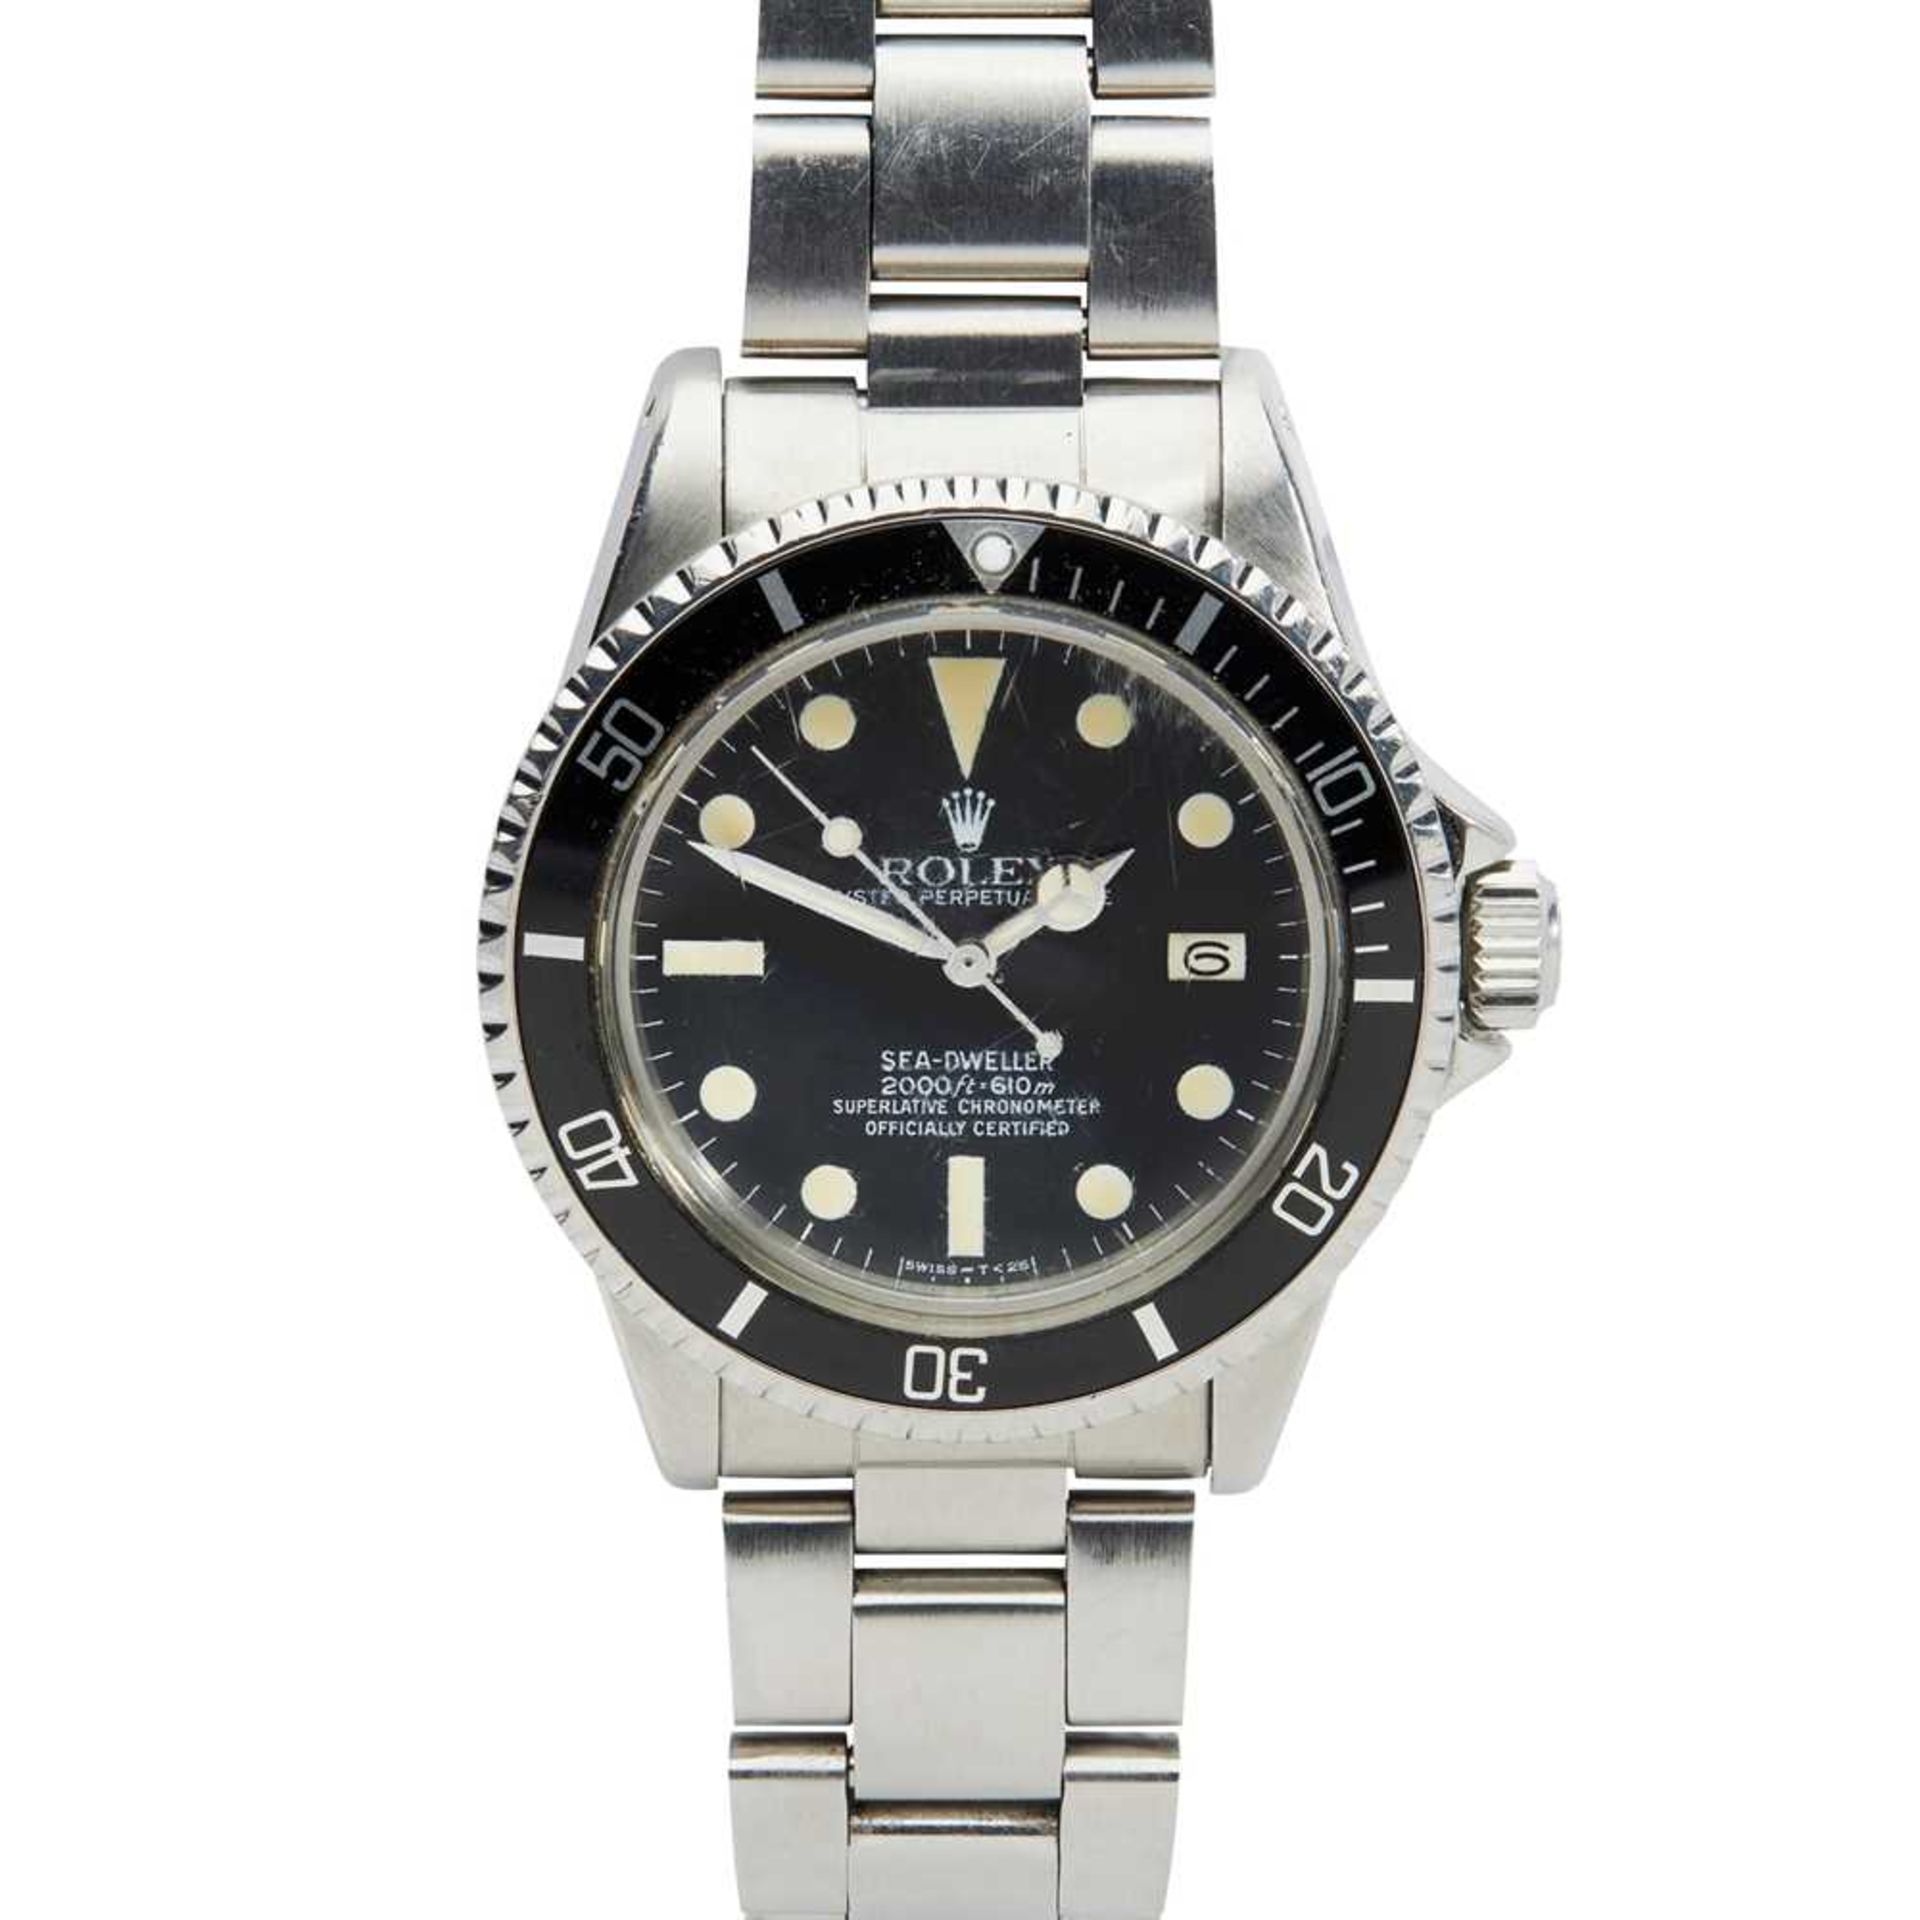 Rolex: a Sea-Dweller 'Great White' wrist watch - Image 2 of 3